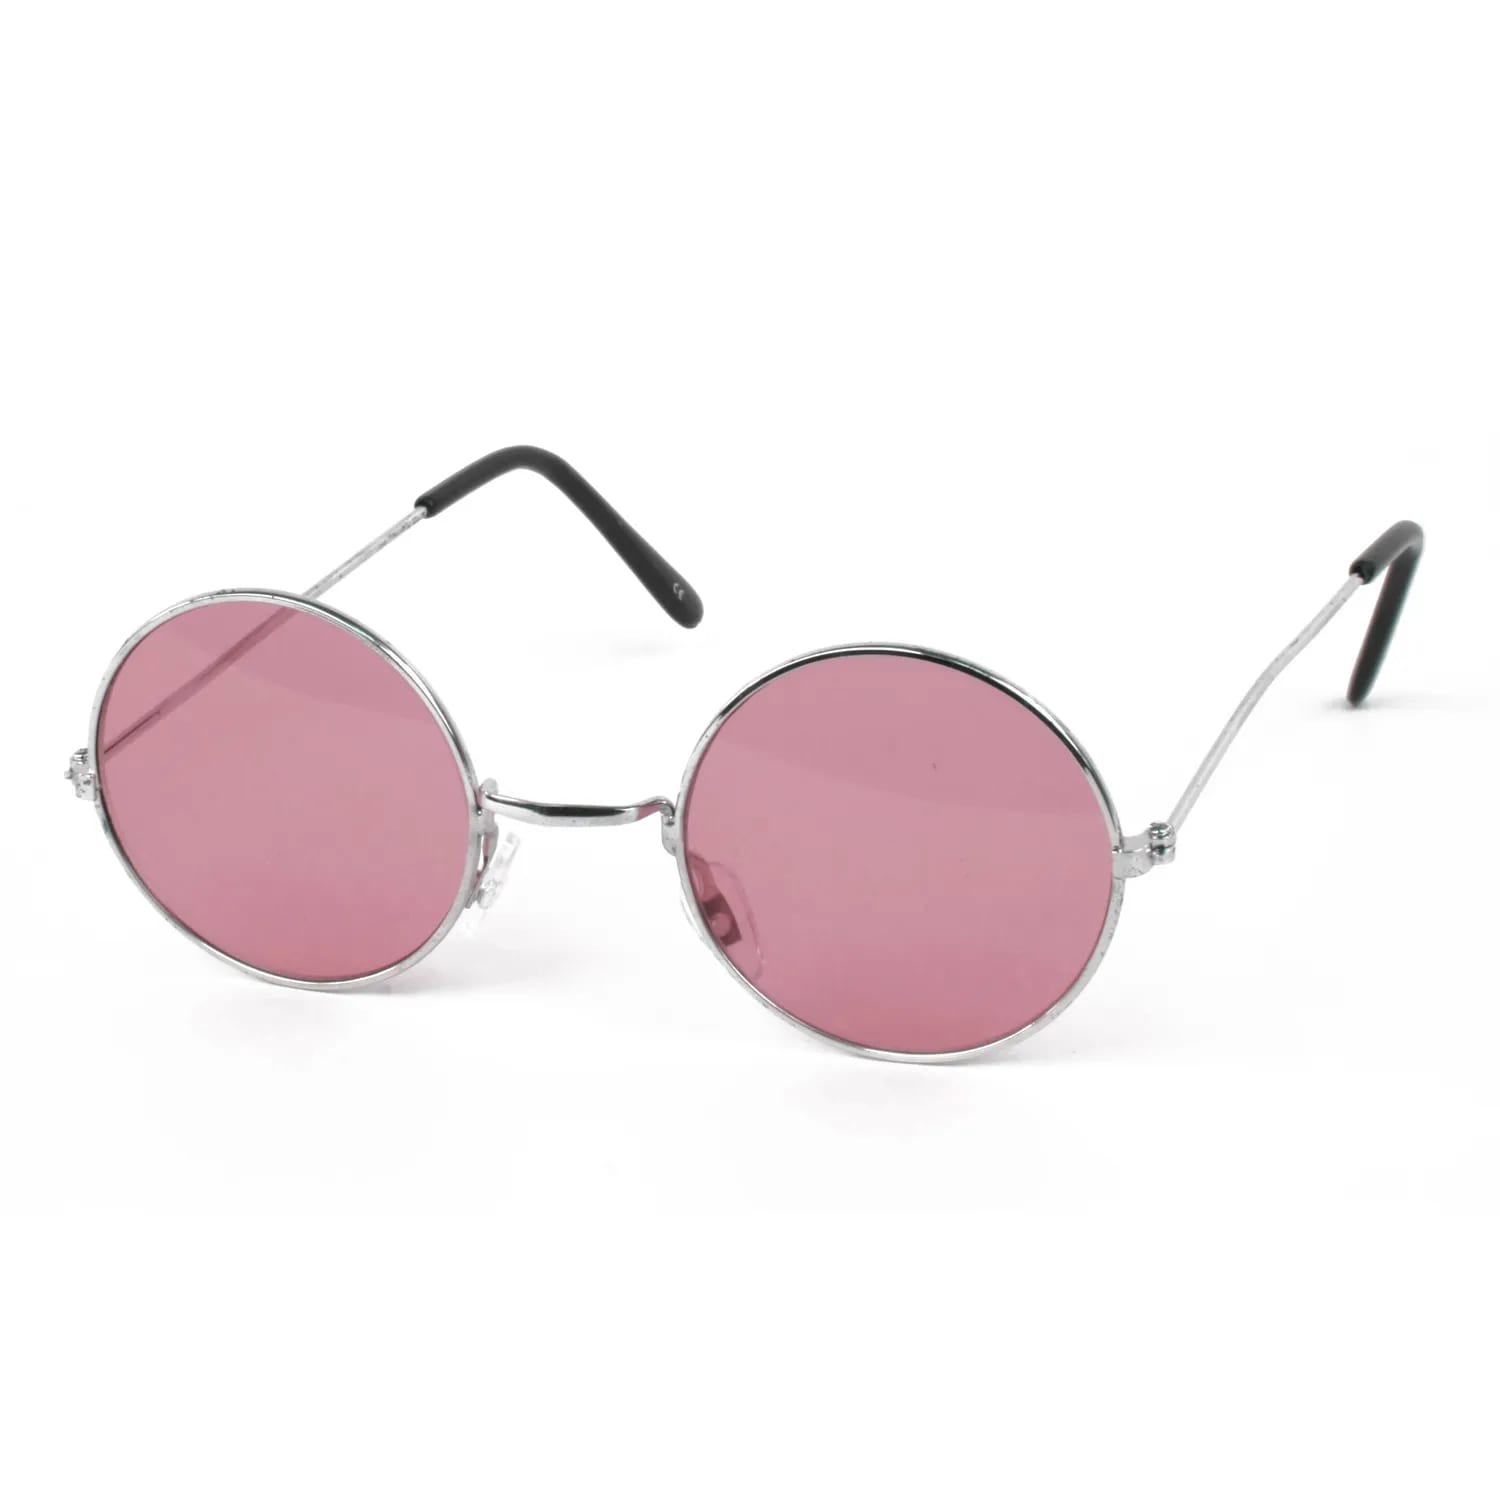 Hippy Glasses (Pink Tint)